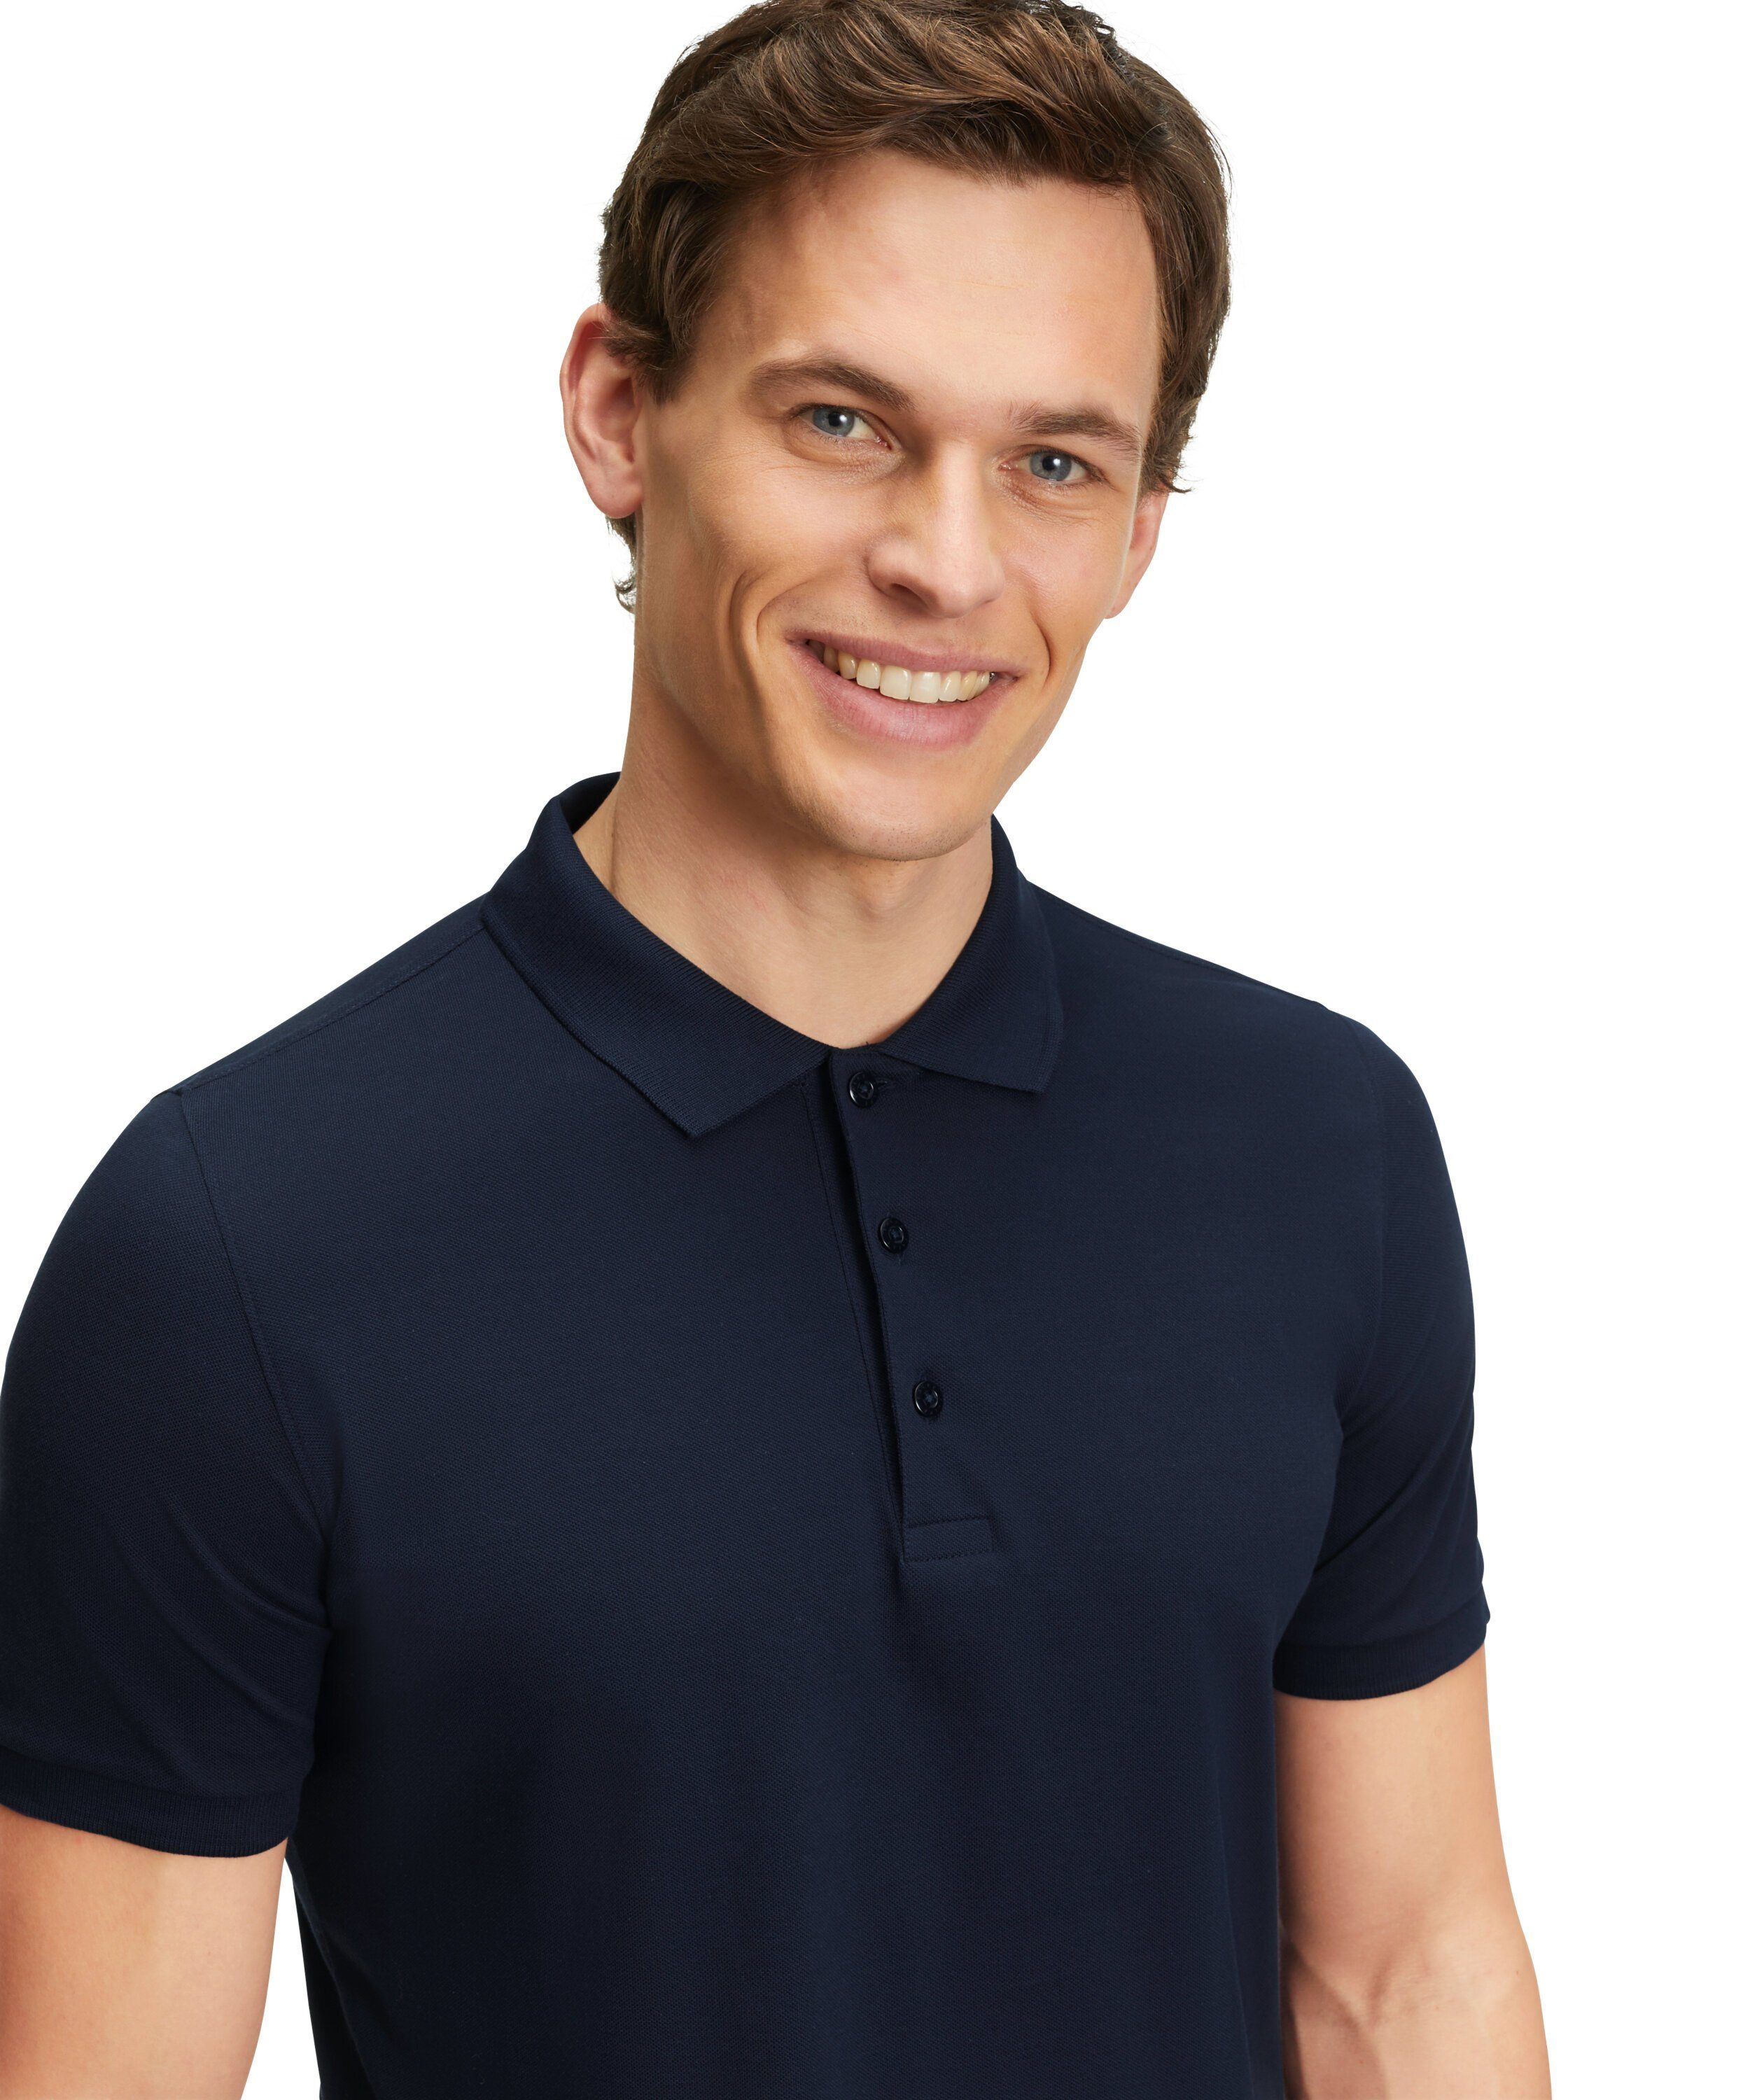 Poloshirt aus (6116) space hochwertiger Pima-Baumwolle FALKE blue